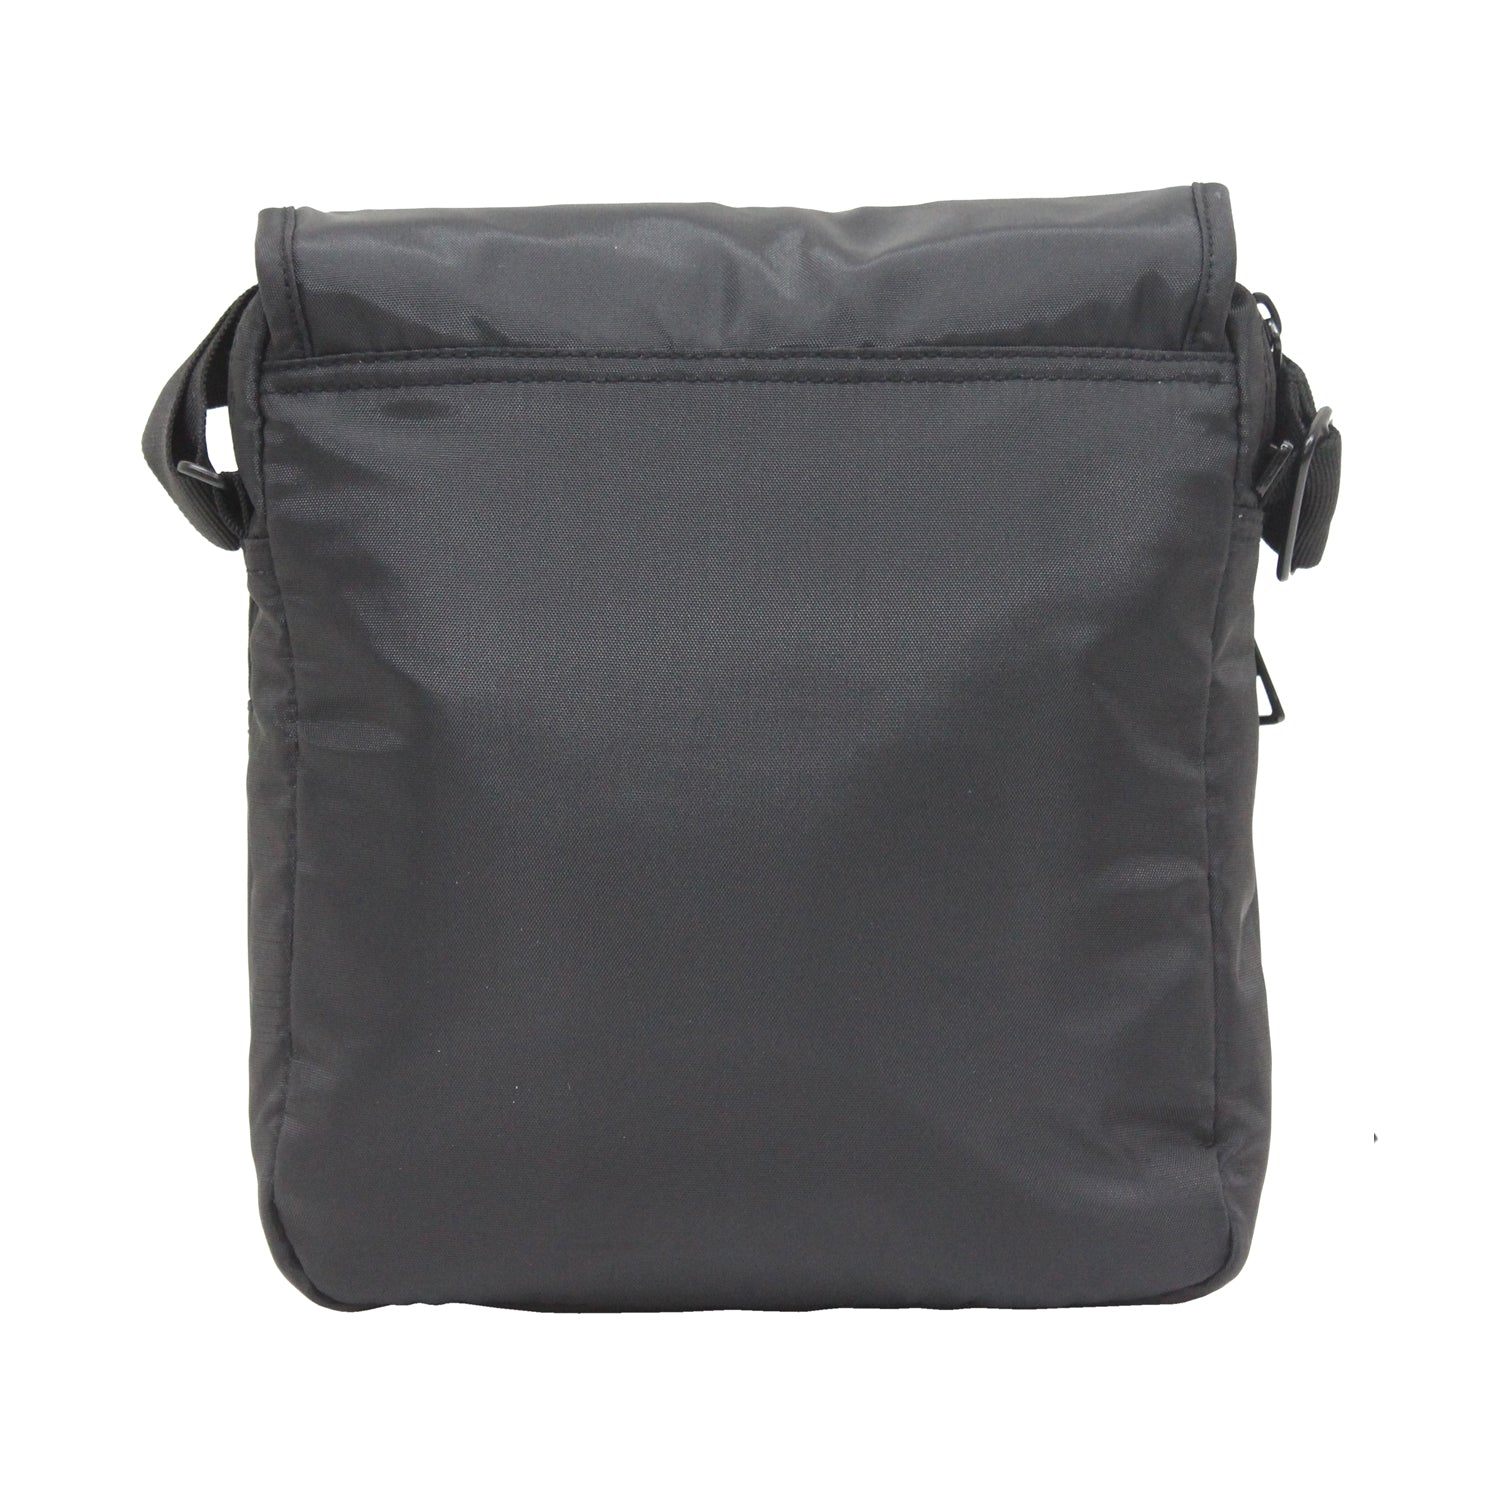 National Geographic Transform - Achterkant Zwart schoudertas met flap | luggage4u.be